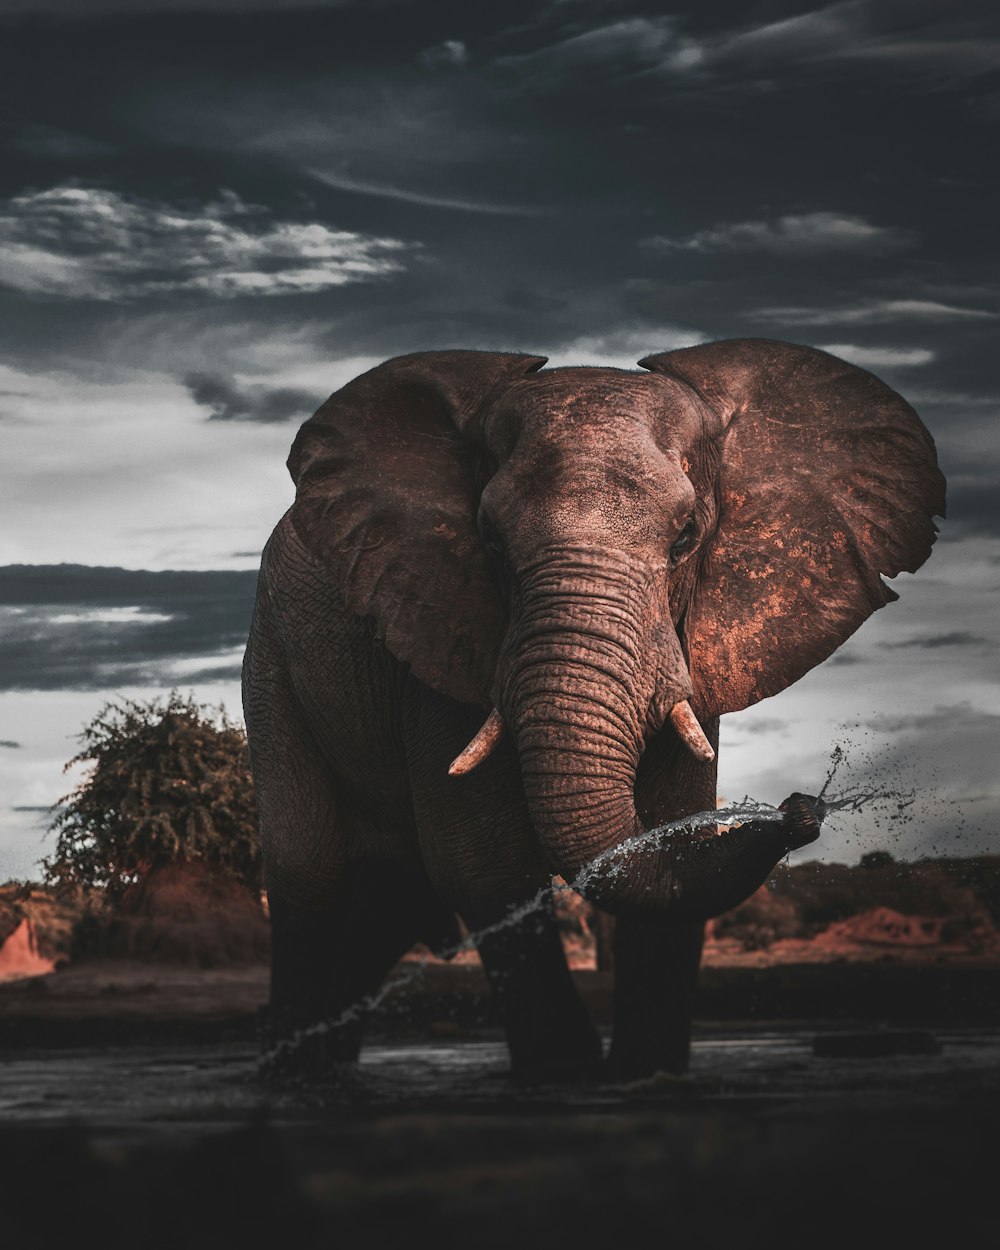 Fondos de pantalla de elefantes: Descarga HD gratuita [500+ HQ] | Unsplash